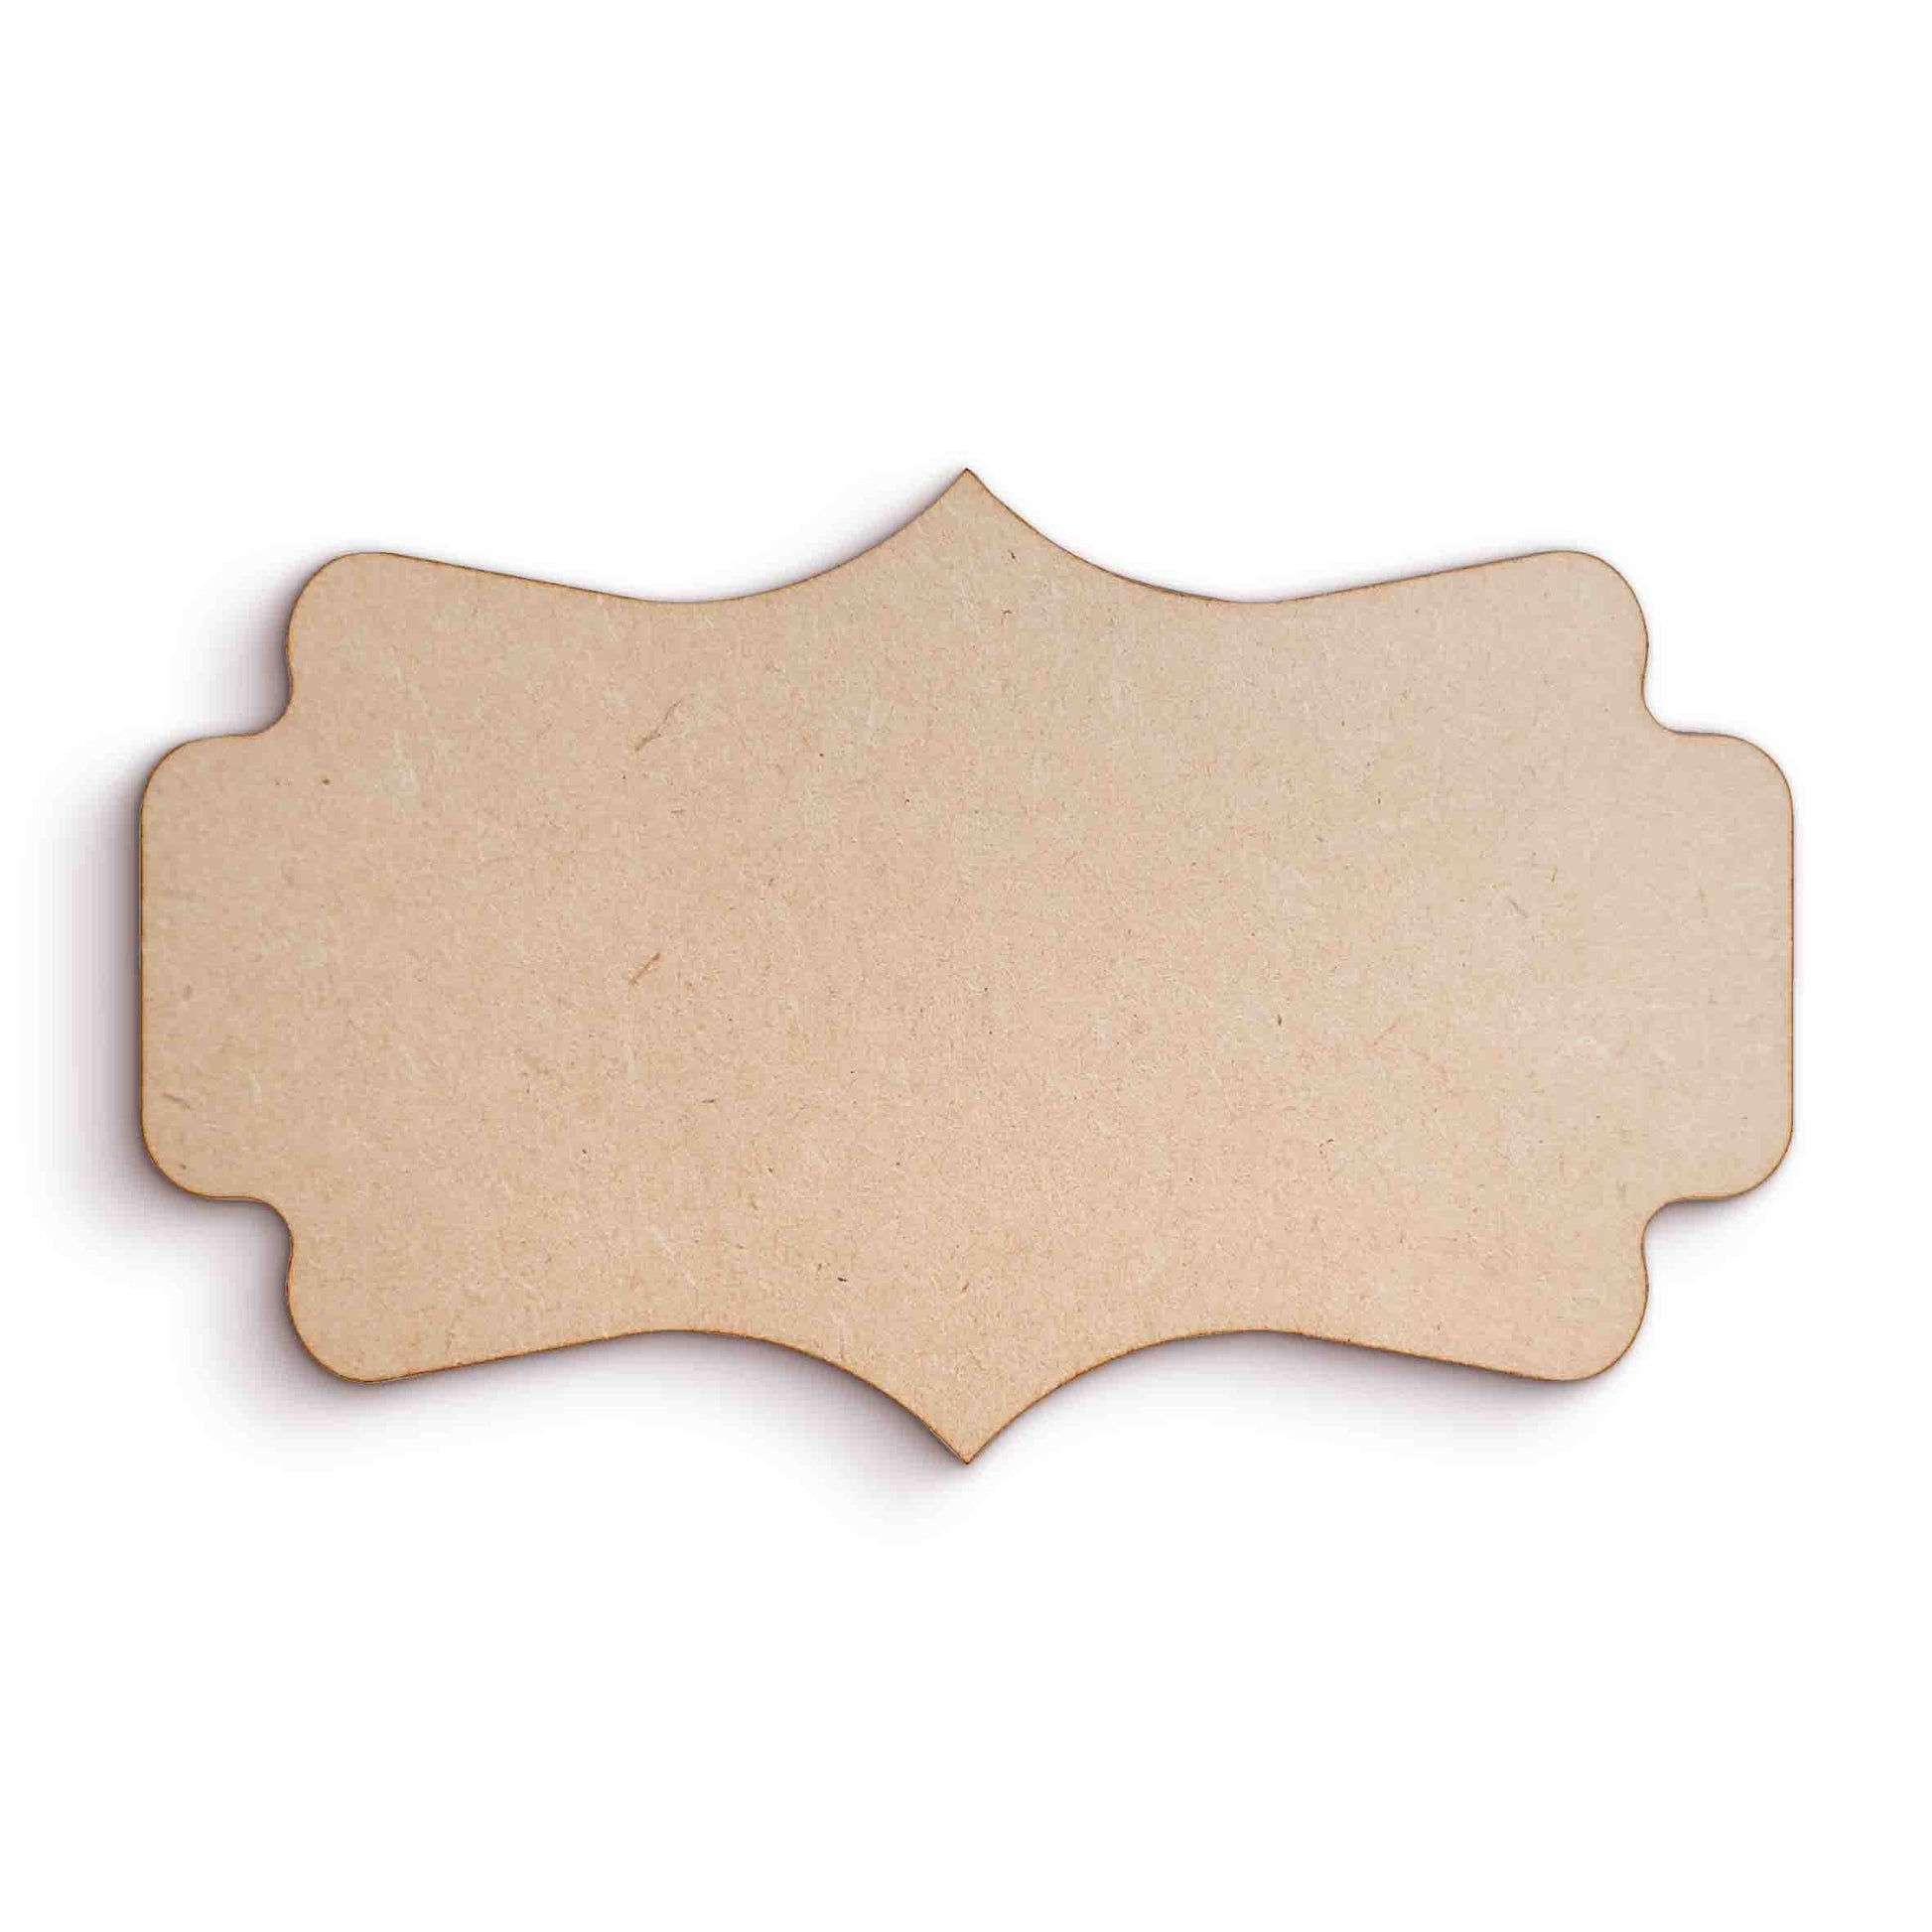 Plaque - Sign wooden craft shape Shape.